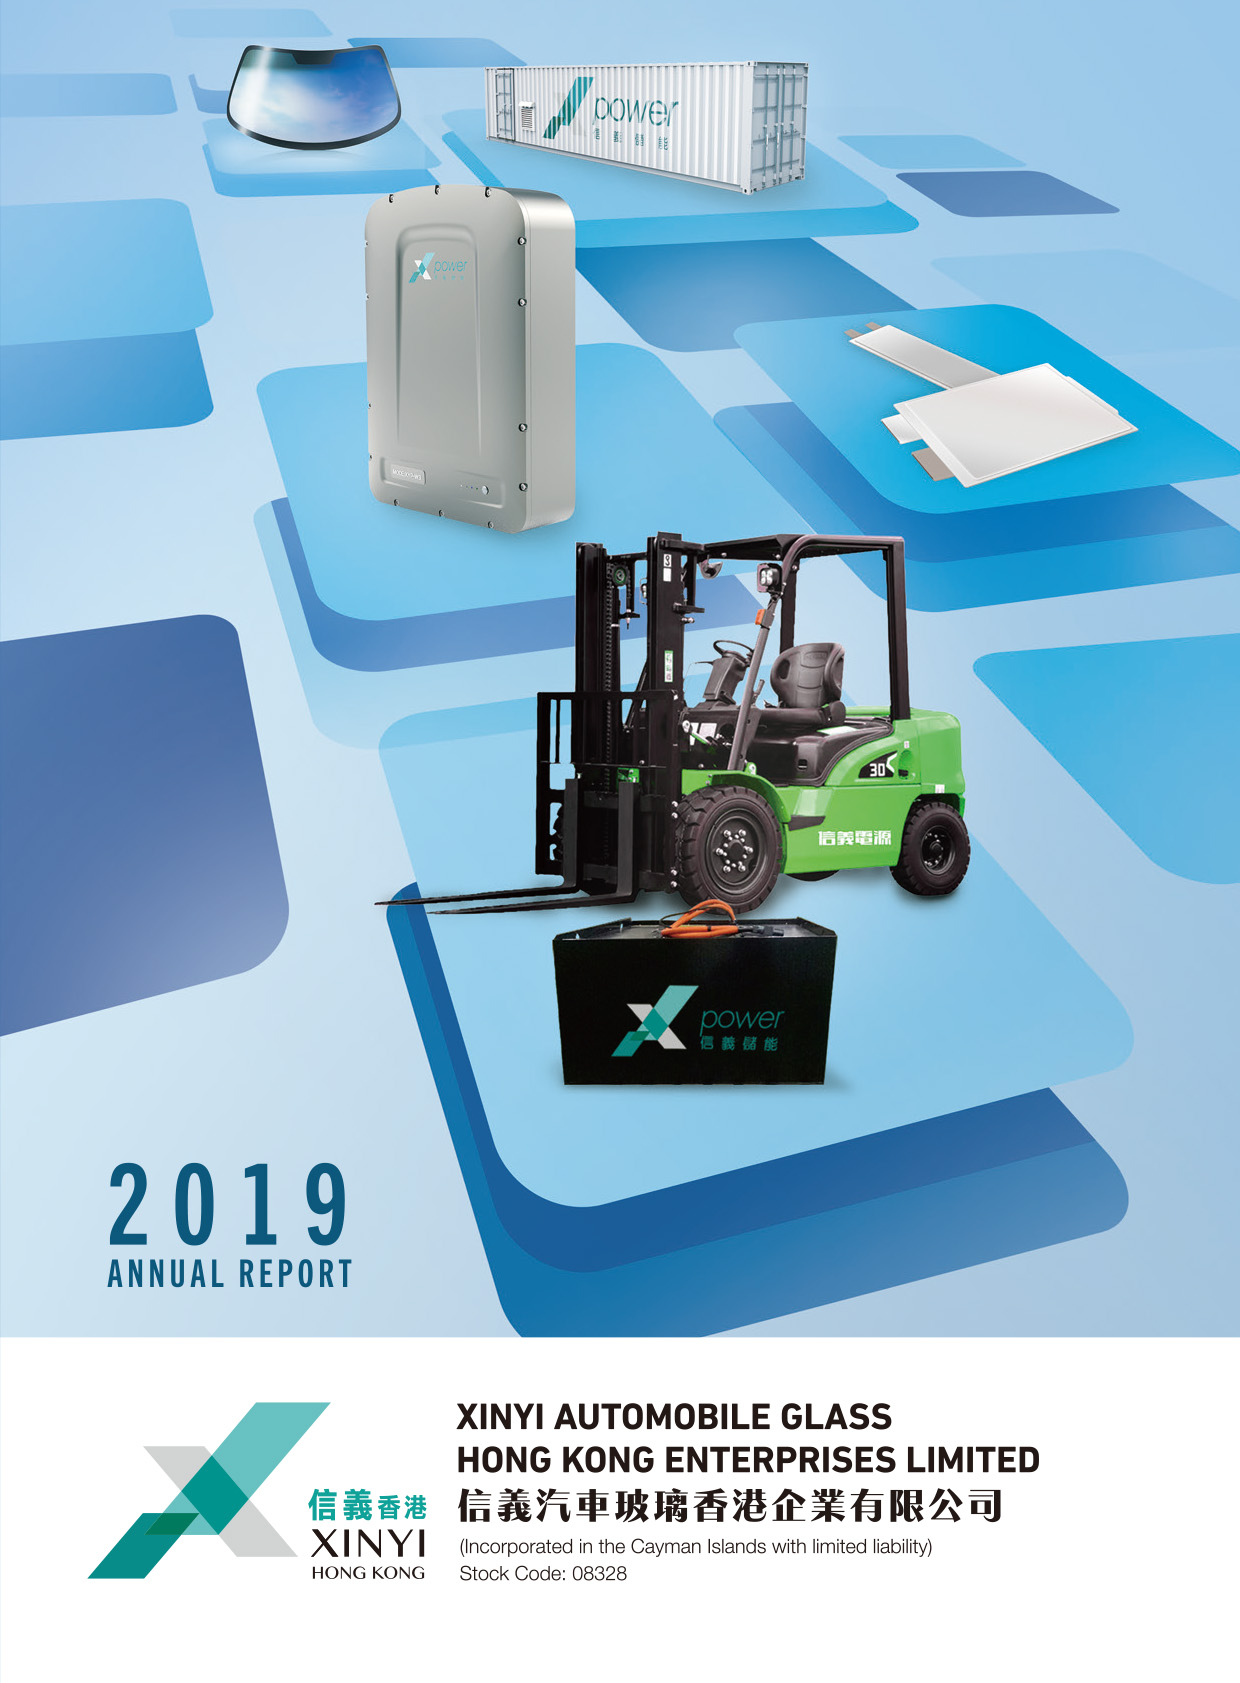 Xinyi Automobile Glass Hong Kong Enterprise Limited